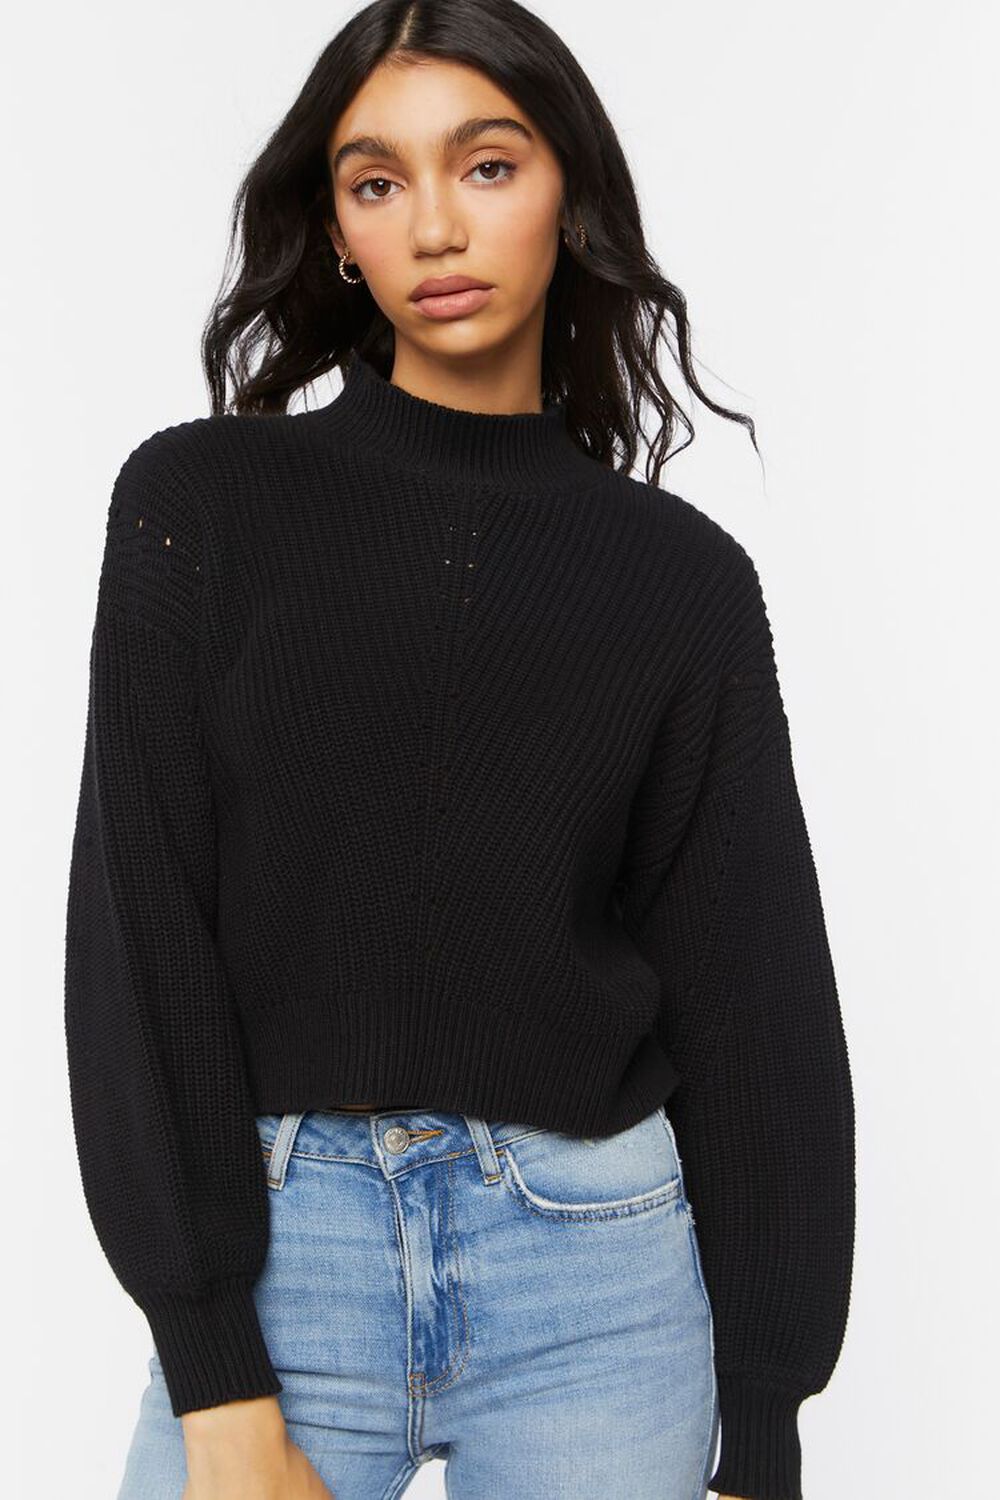 BLACK Pointelle Mock Neck Sweater, image 1